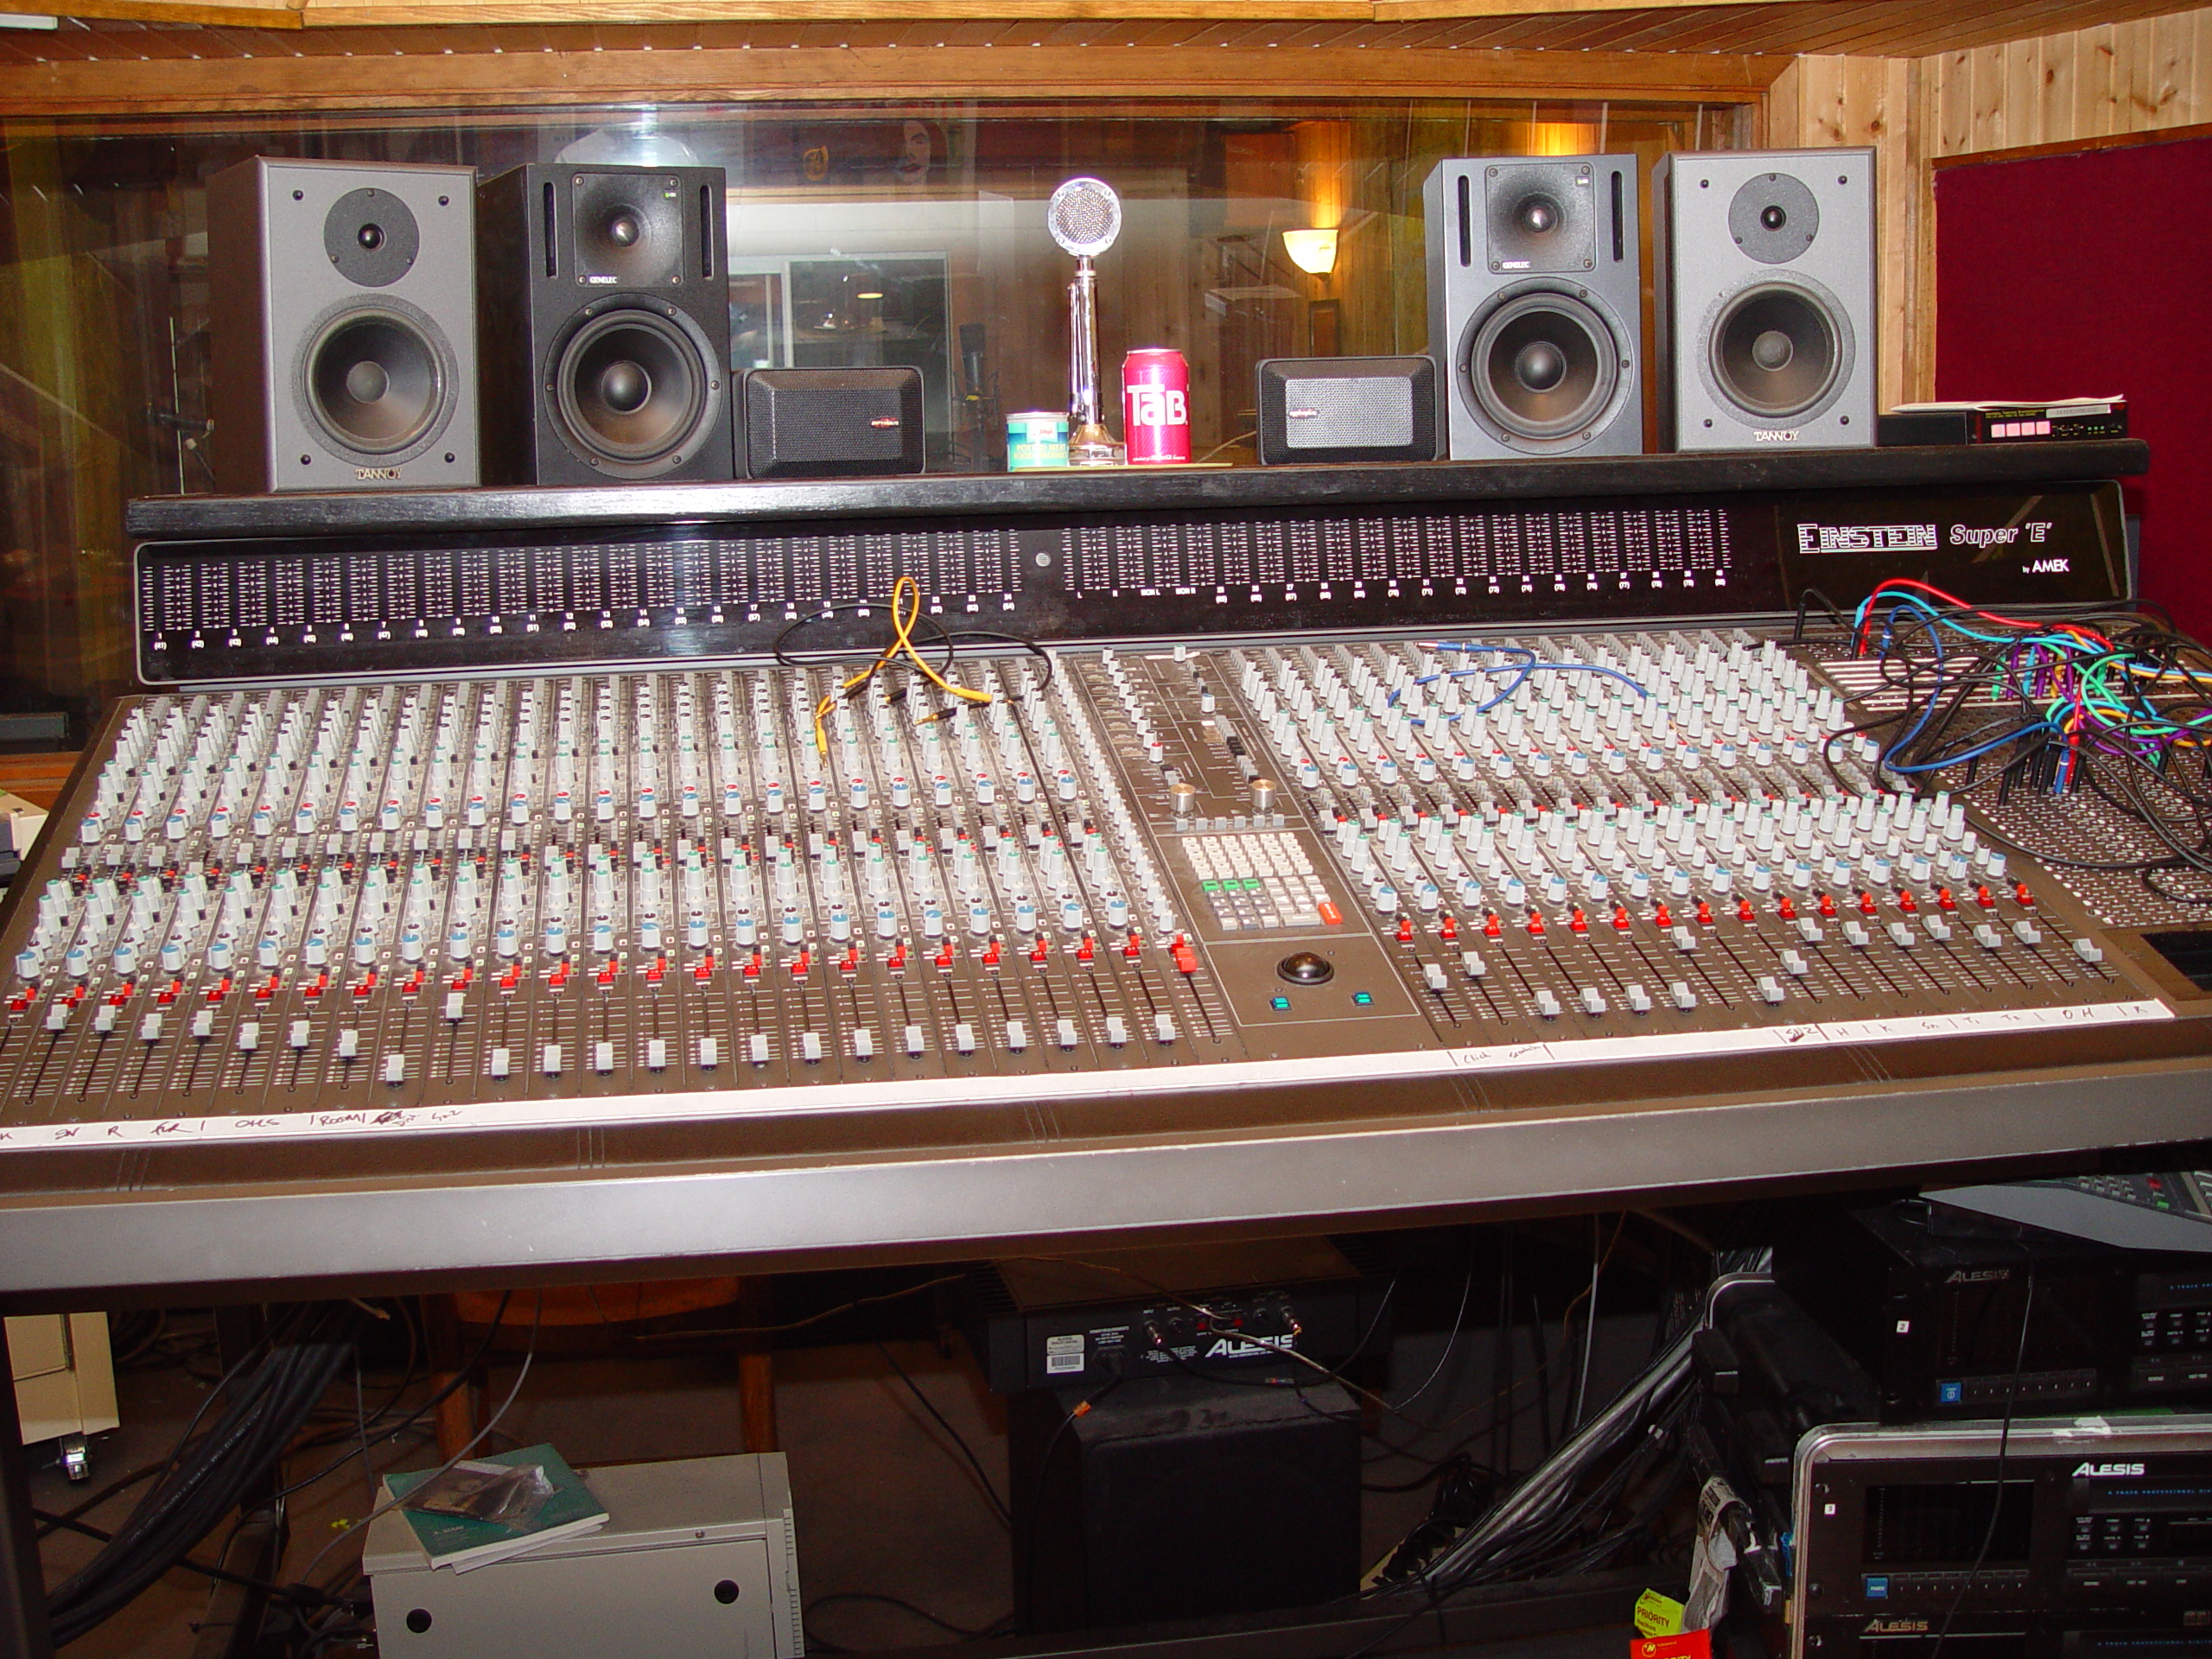 The console at Jupiter Studios